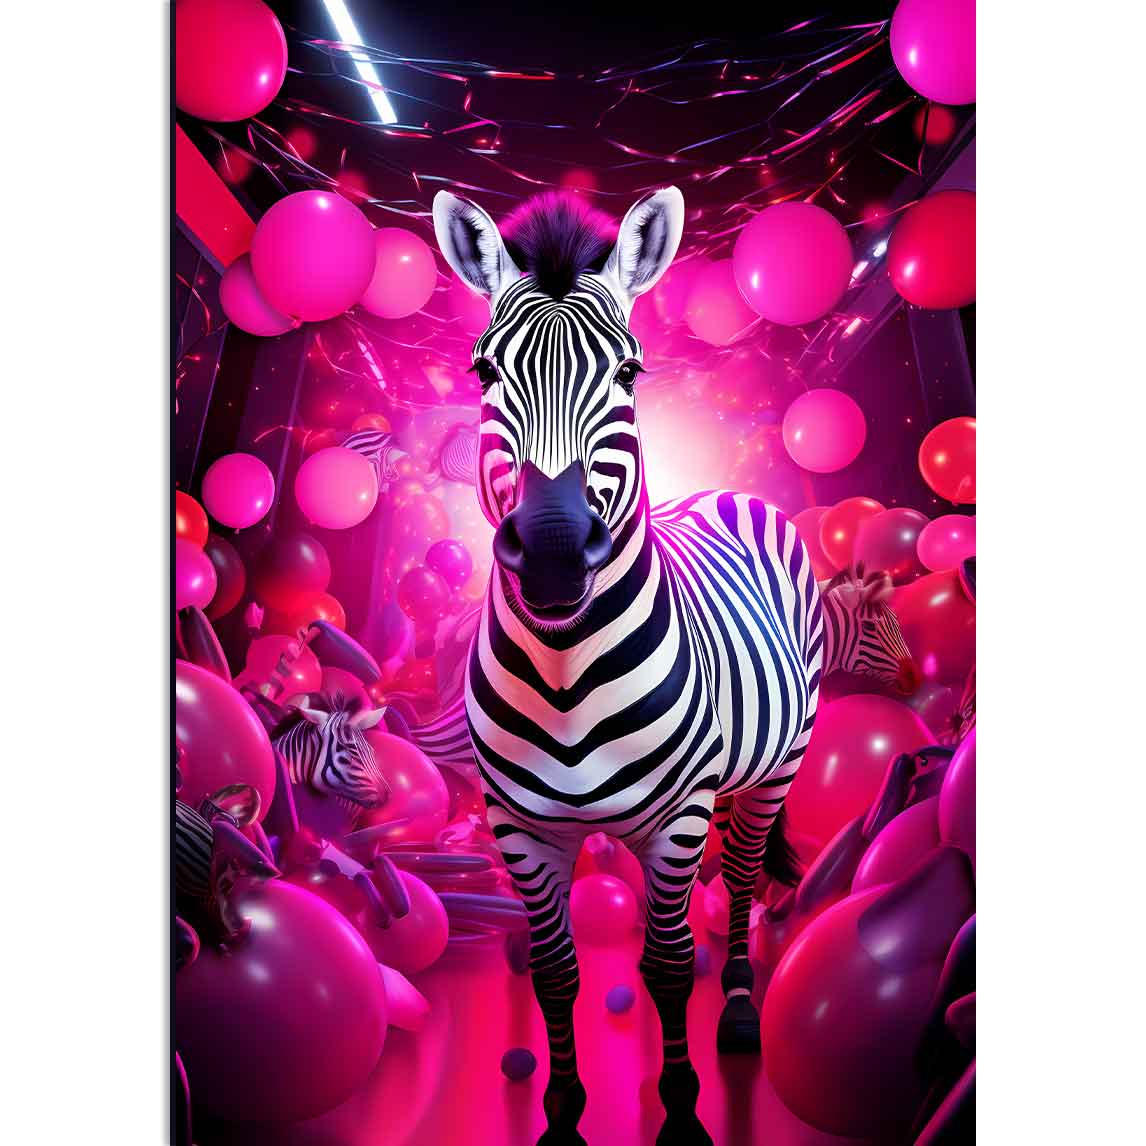 PINK ZEBRA CLUBBIN' - Zebra am feiern